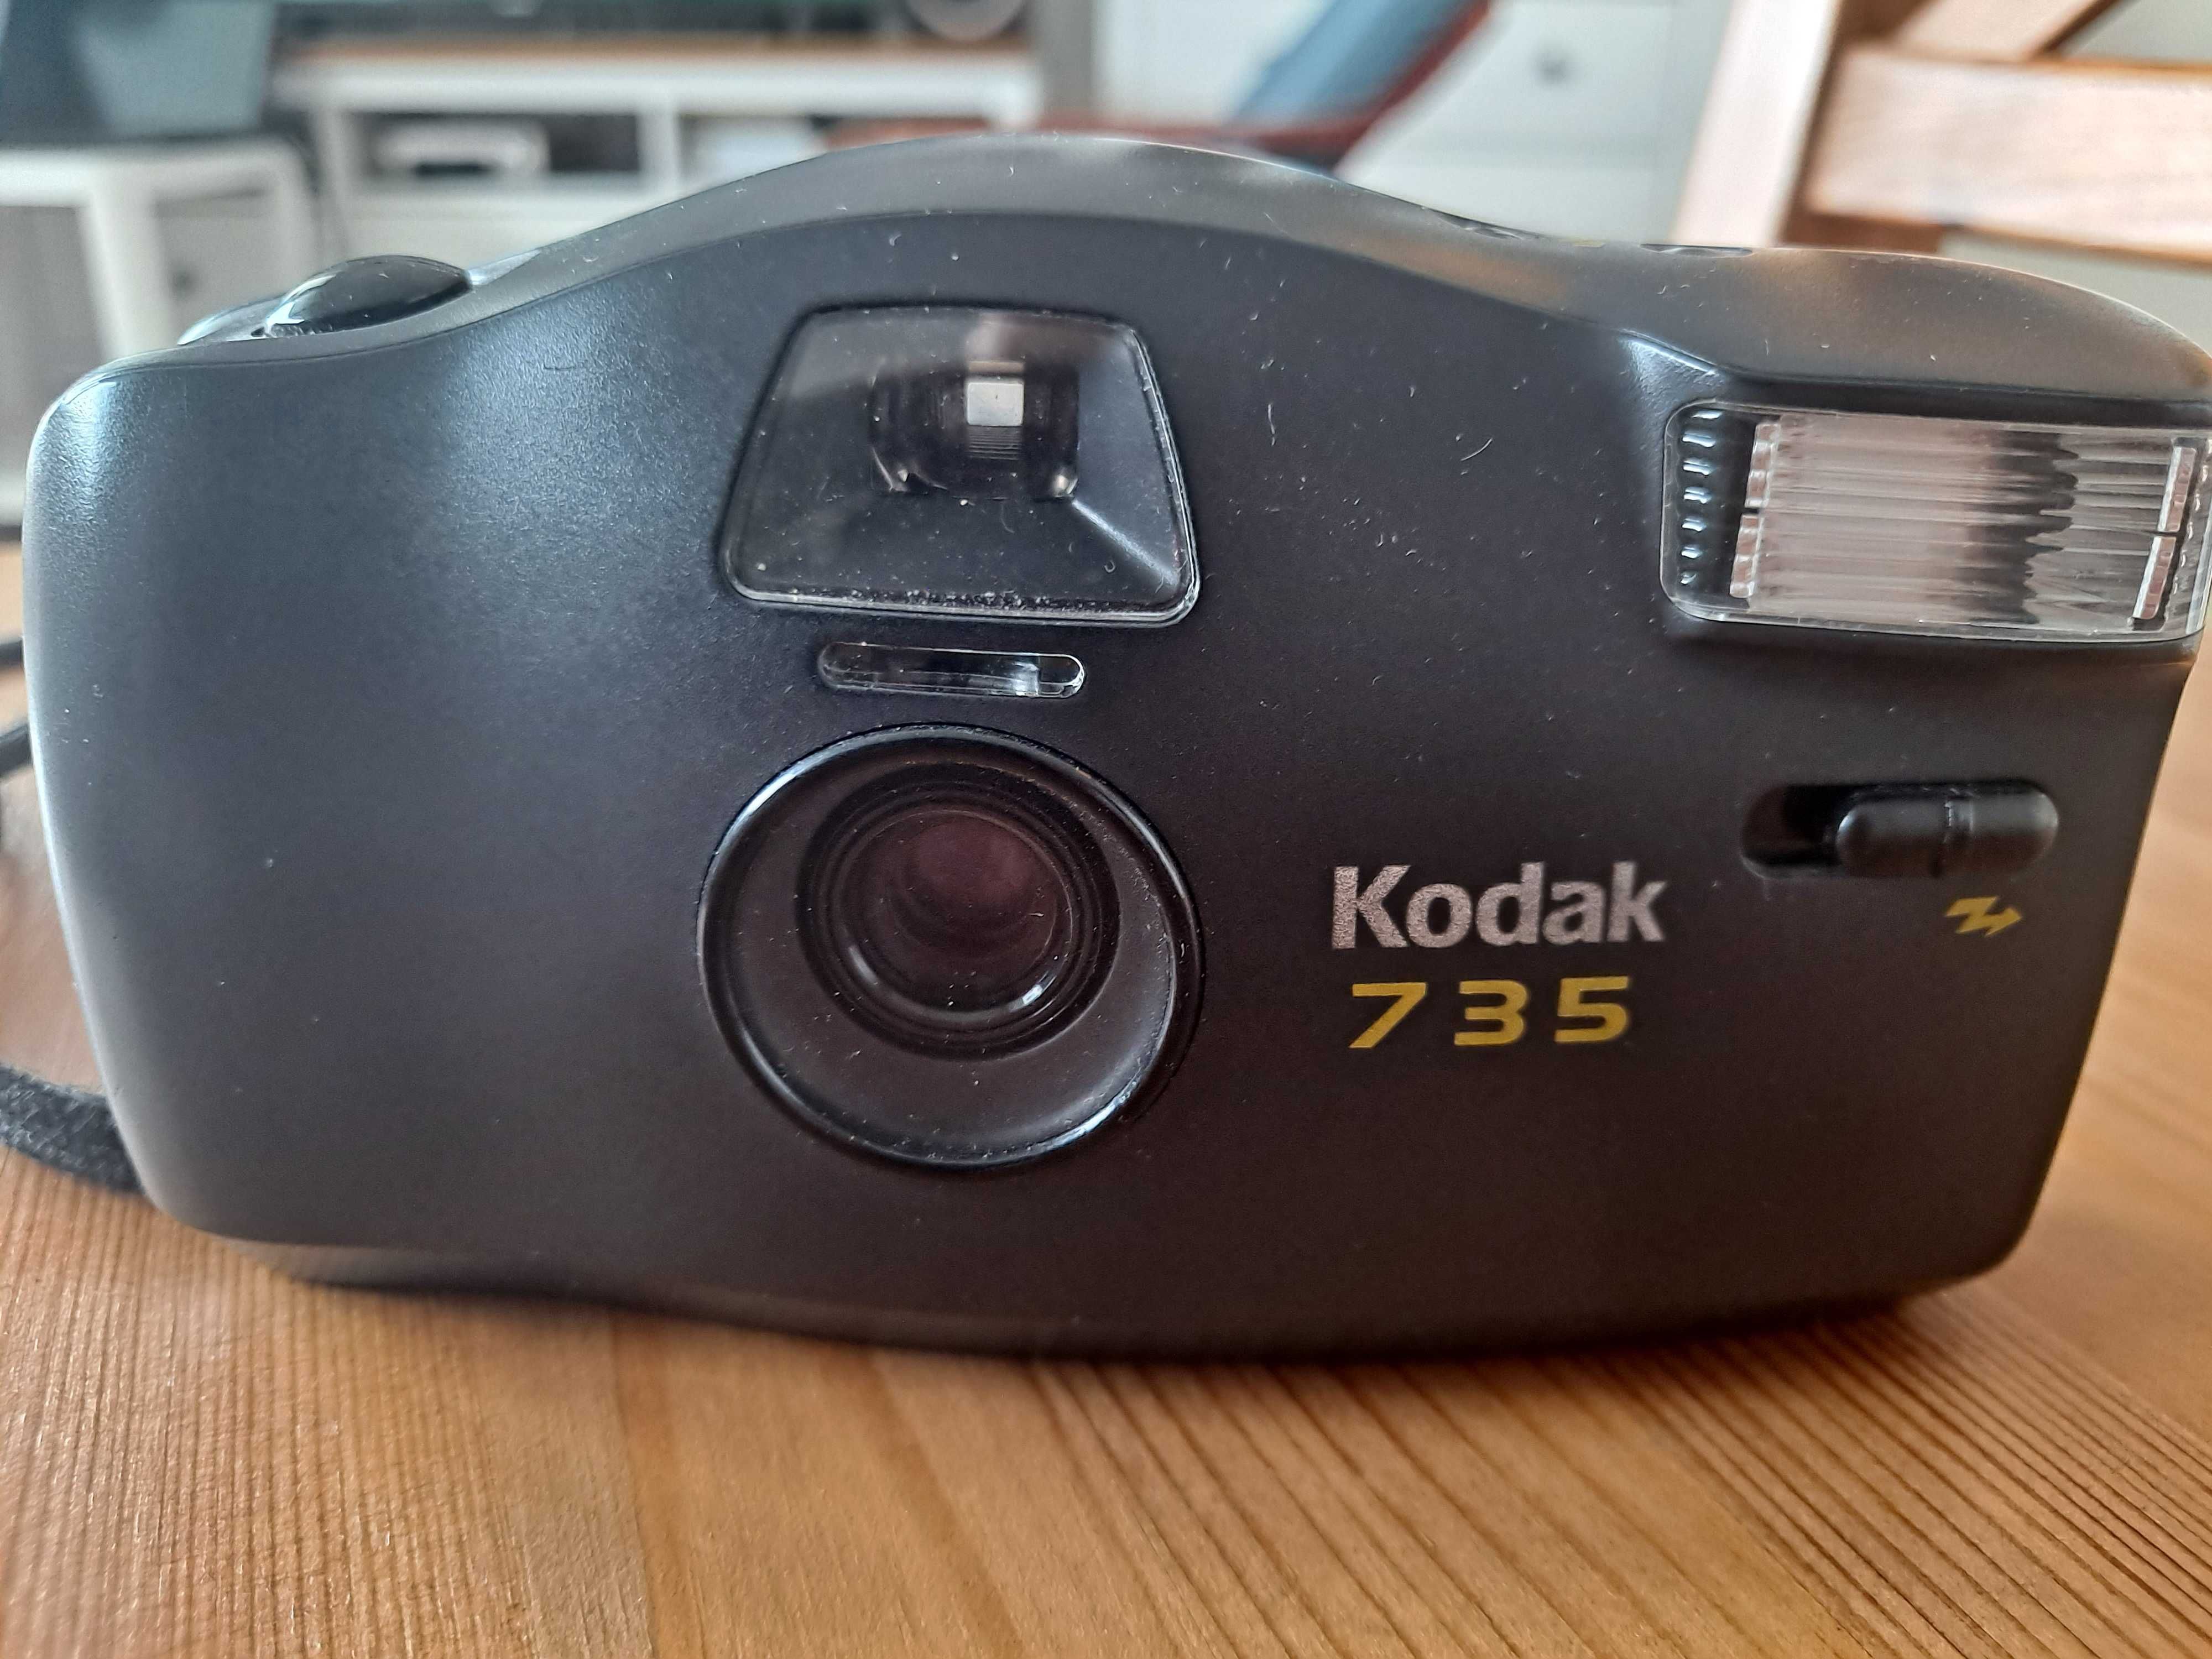 Aparat kompaktowy Kodak 735